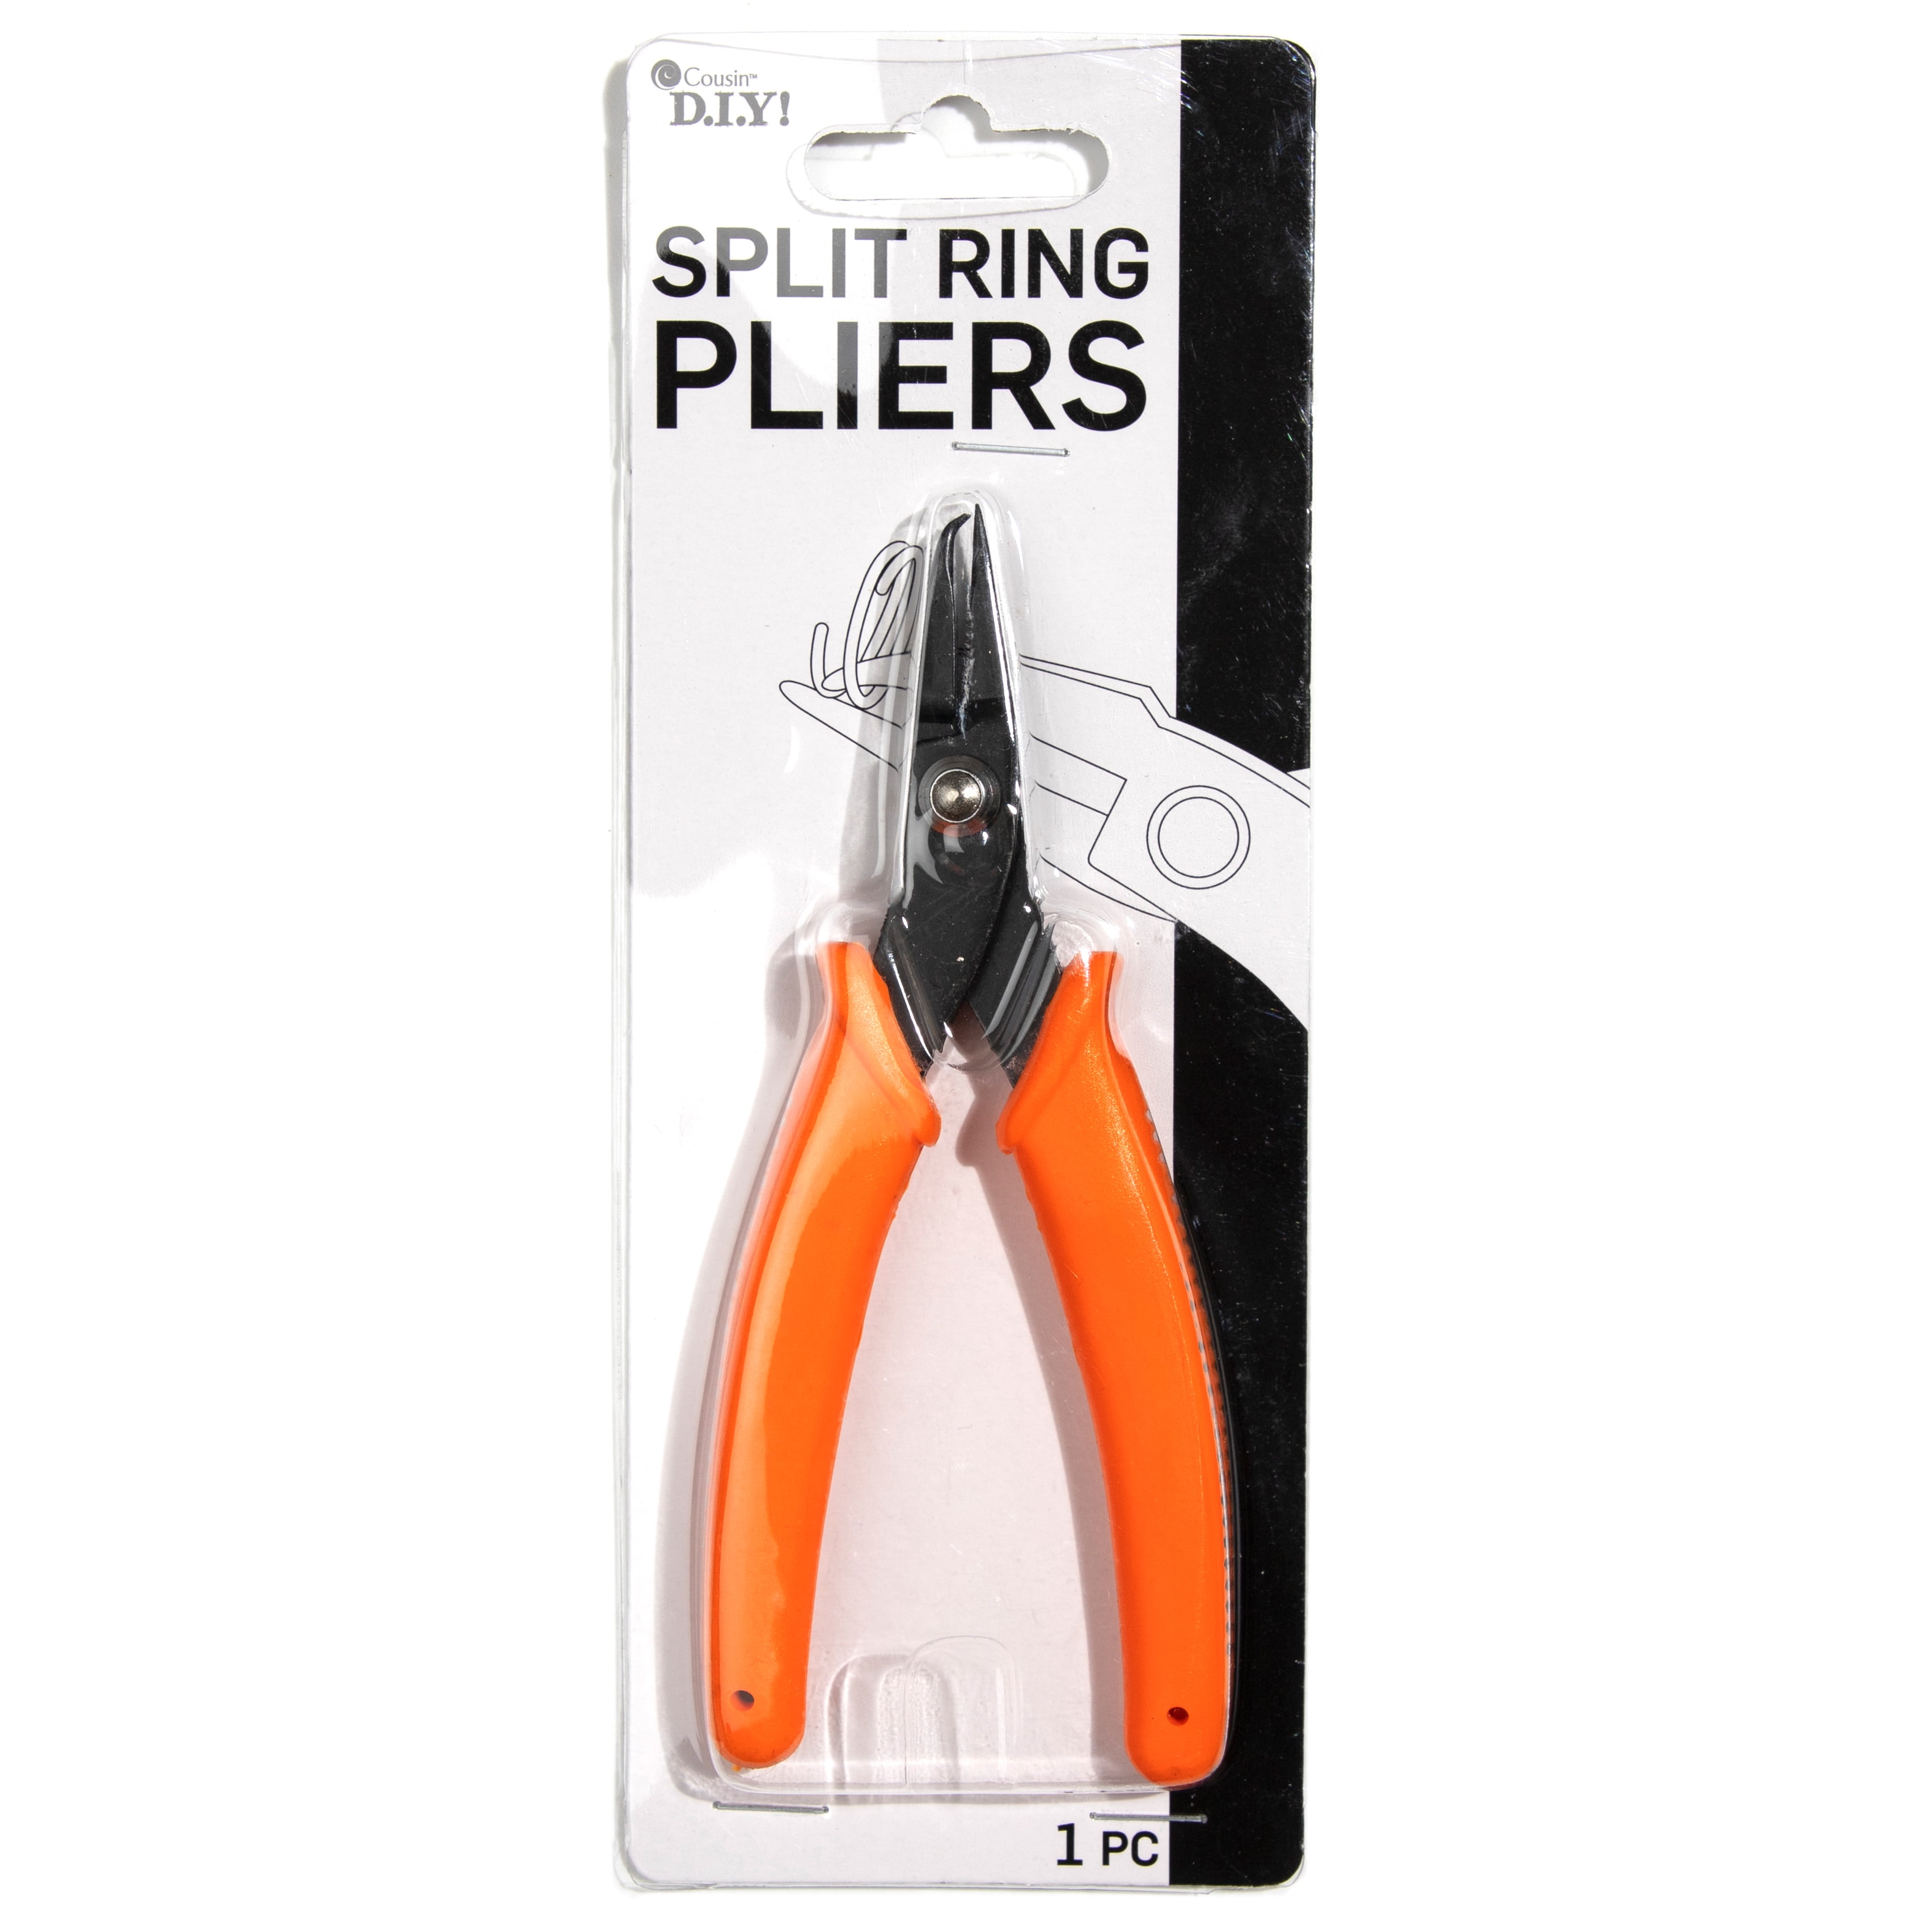 Cousin DIY Orange Split Ring Pliers, Weight: 0.2 lb, Black and Orange, 1 Pc